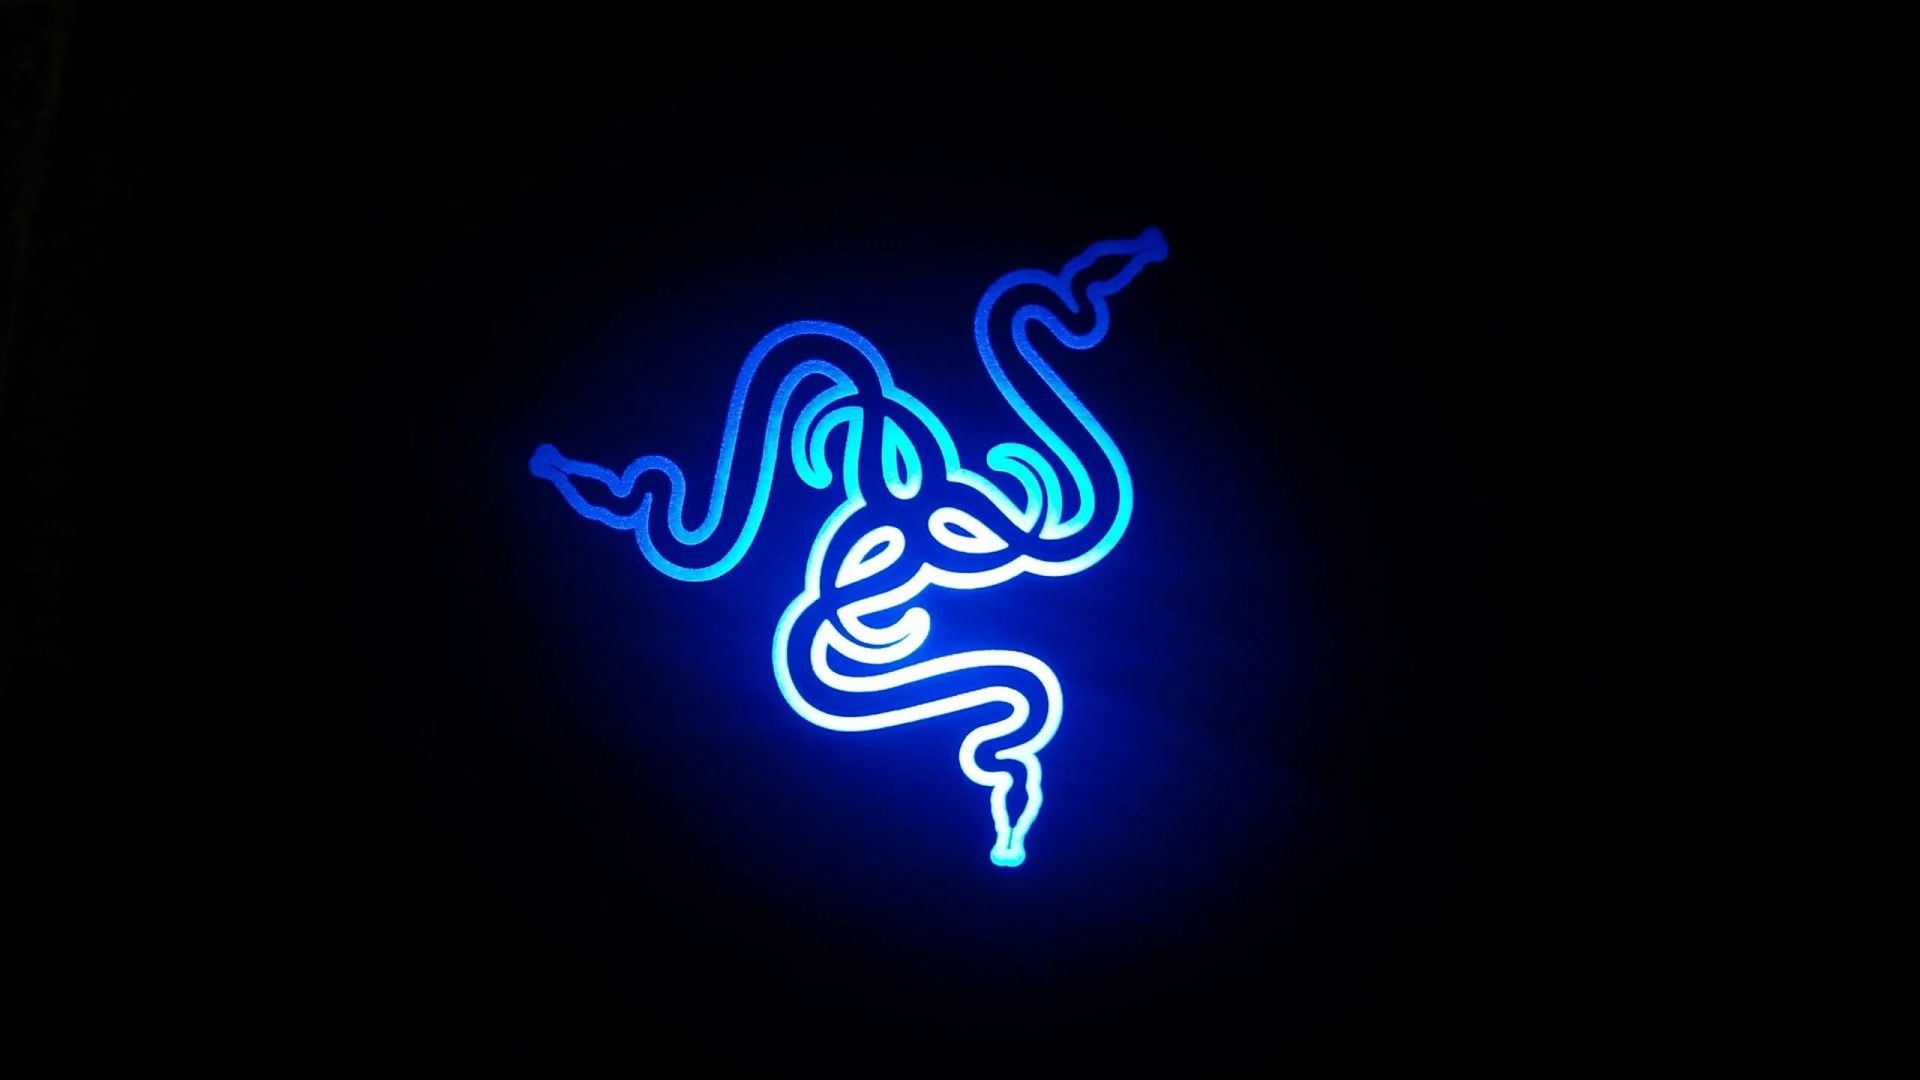 Razer Neon Blue Wallpaper X Pcgamer In